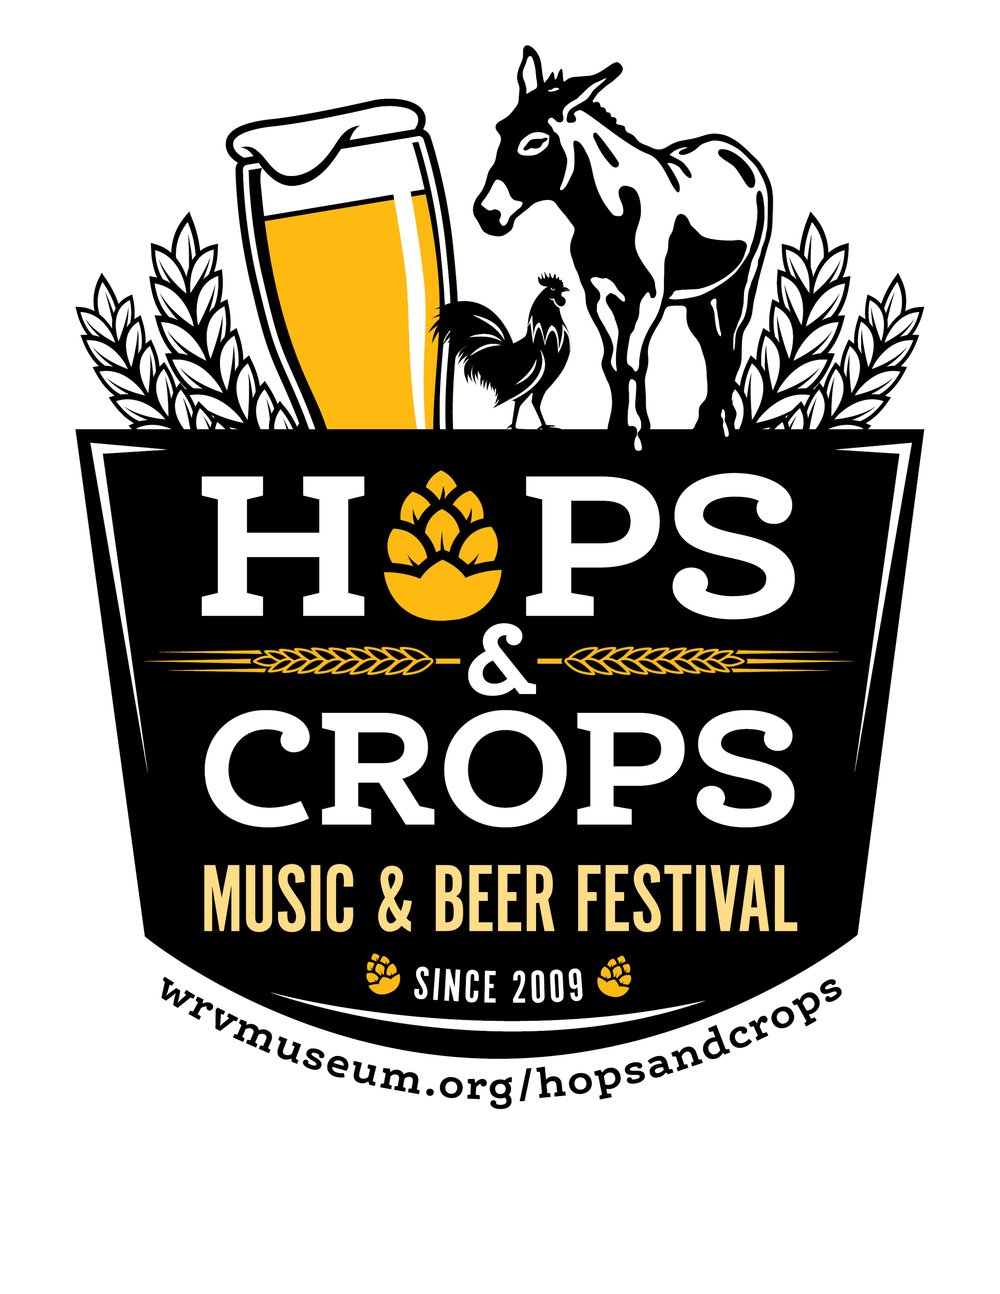 Hops & Crops Music & Beer Festival